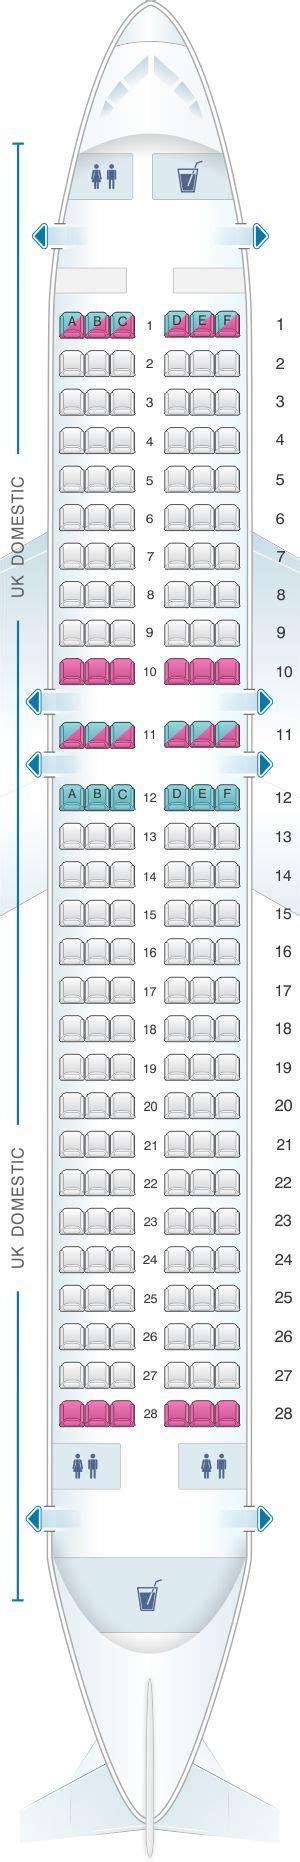 Seat Map British Airways Airbus A320 Domestic Layout Srilankan